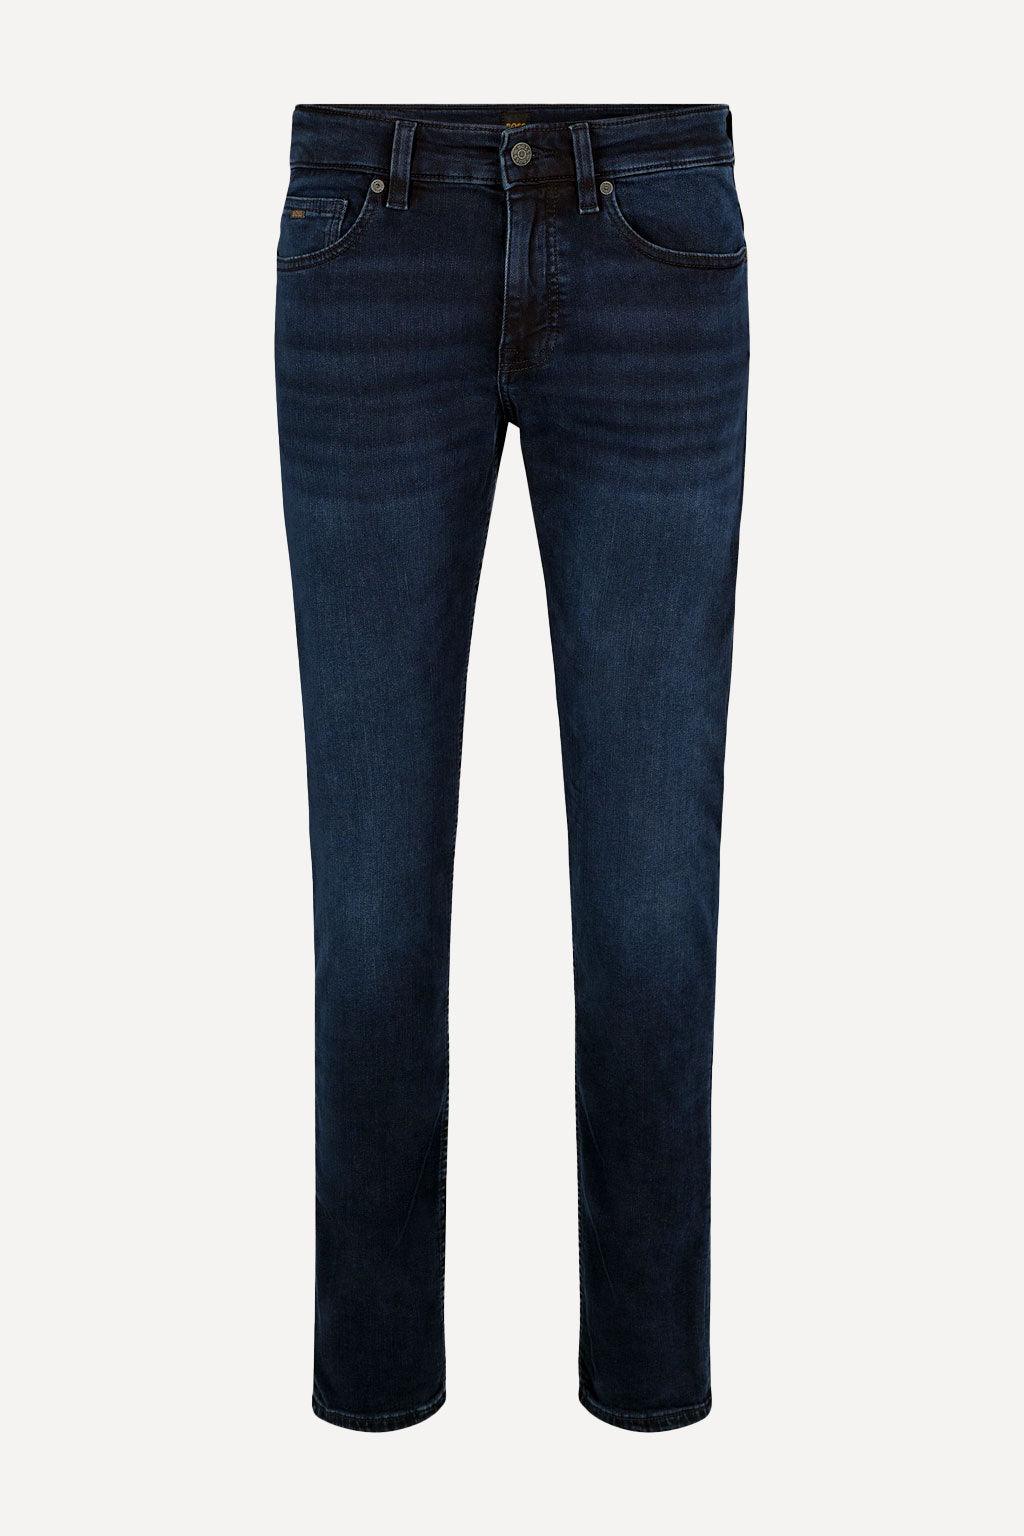 Hugo Boss jeans | Big Boss | the menswear concept